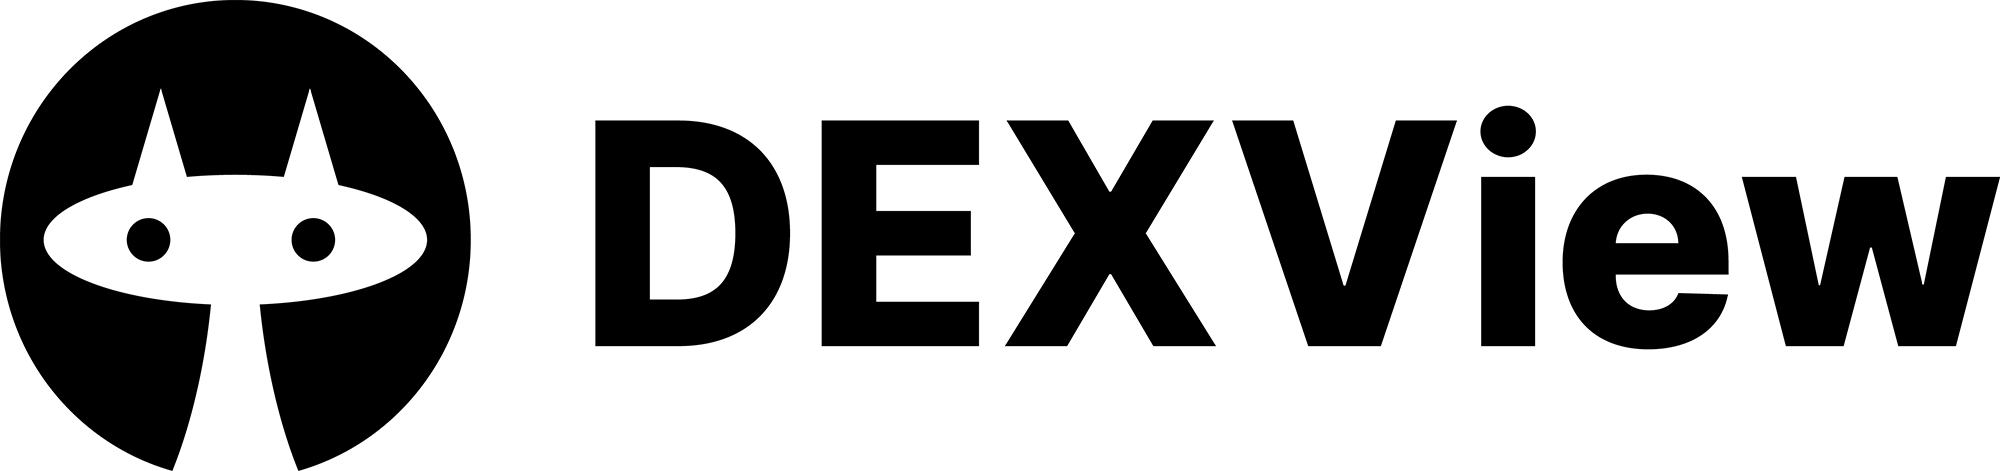 dexview logo